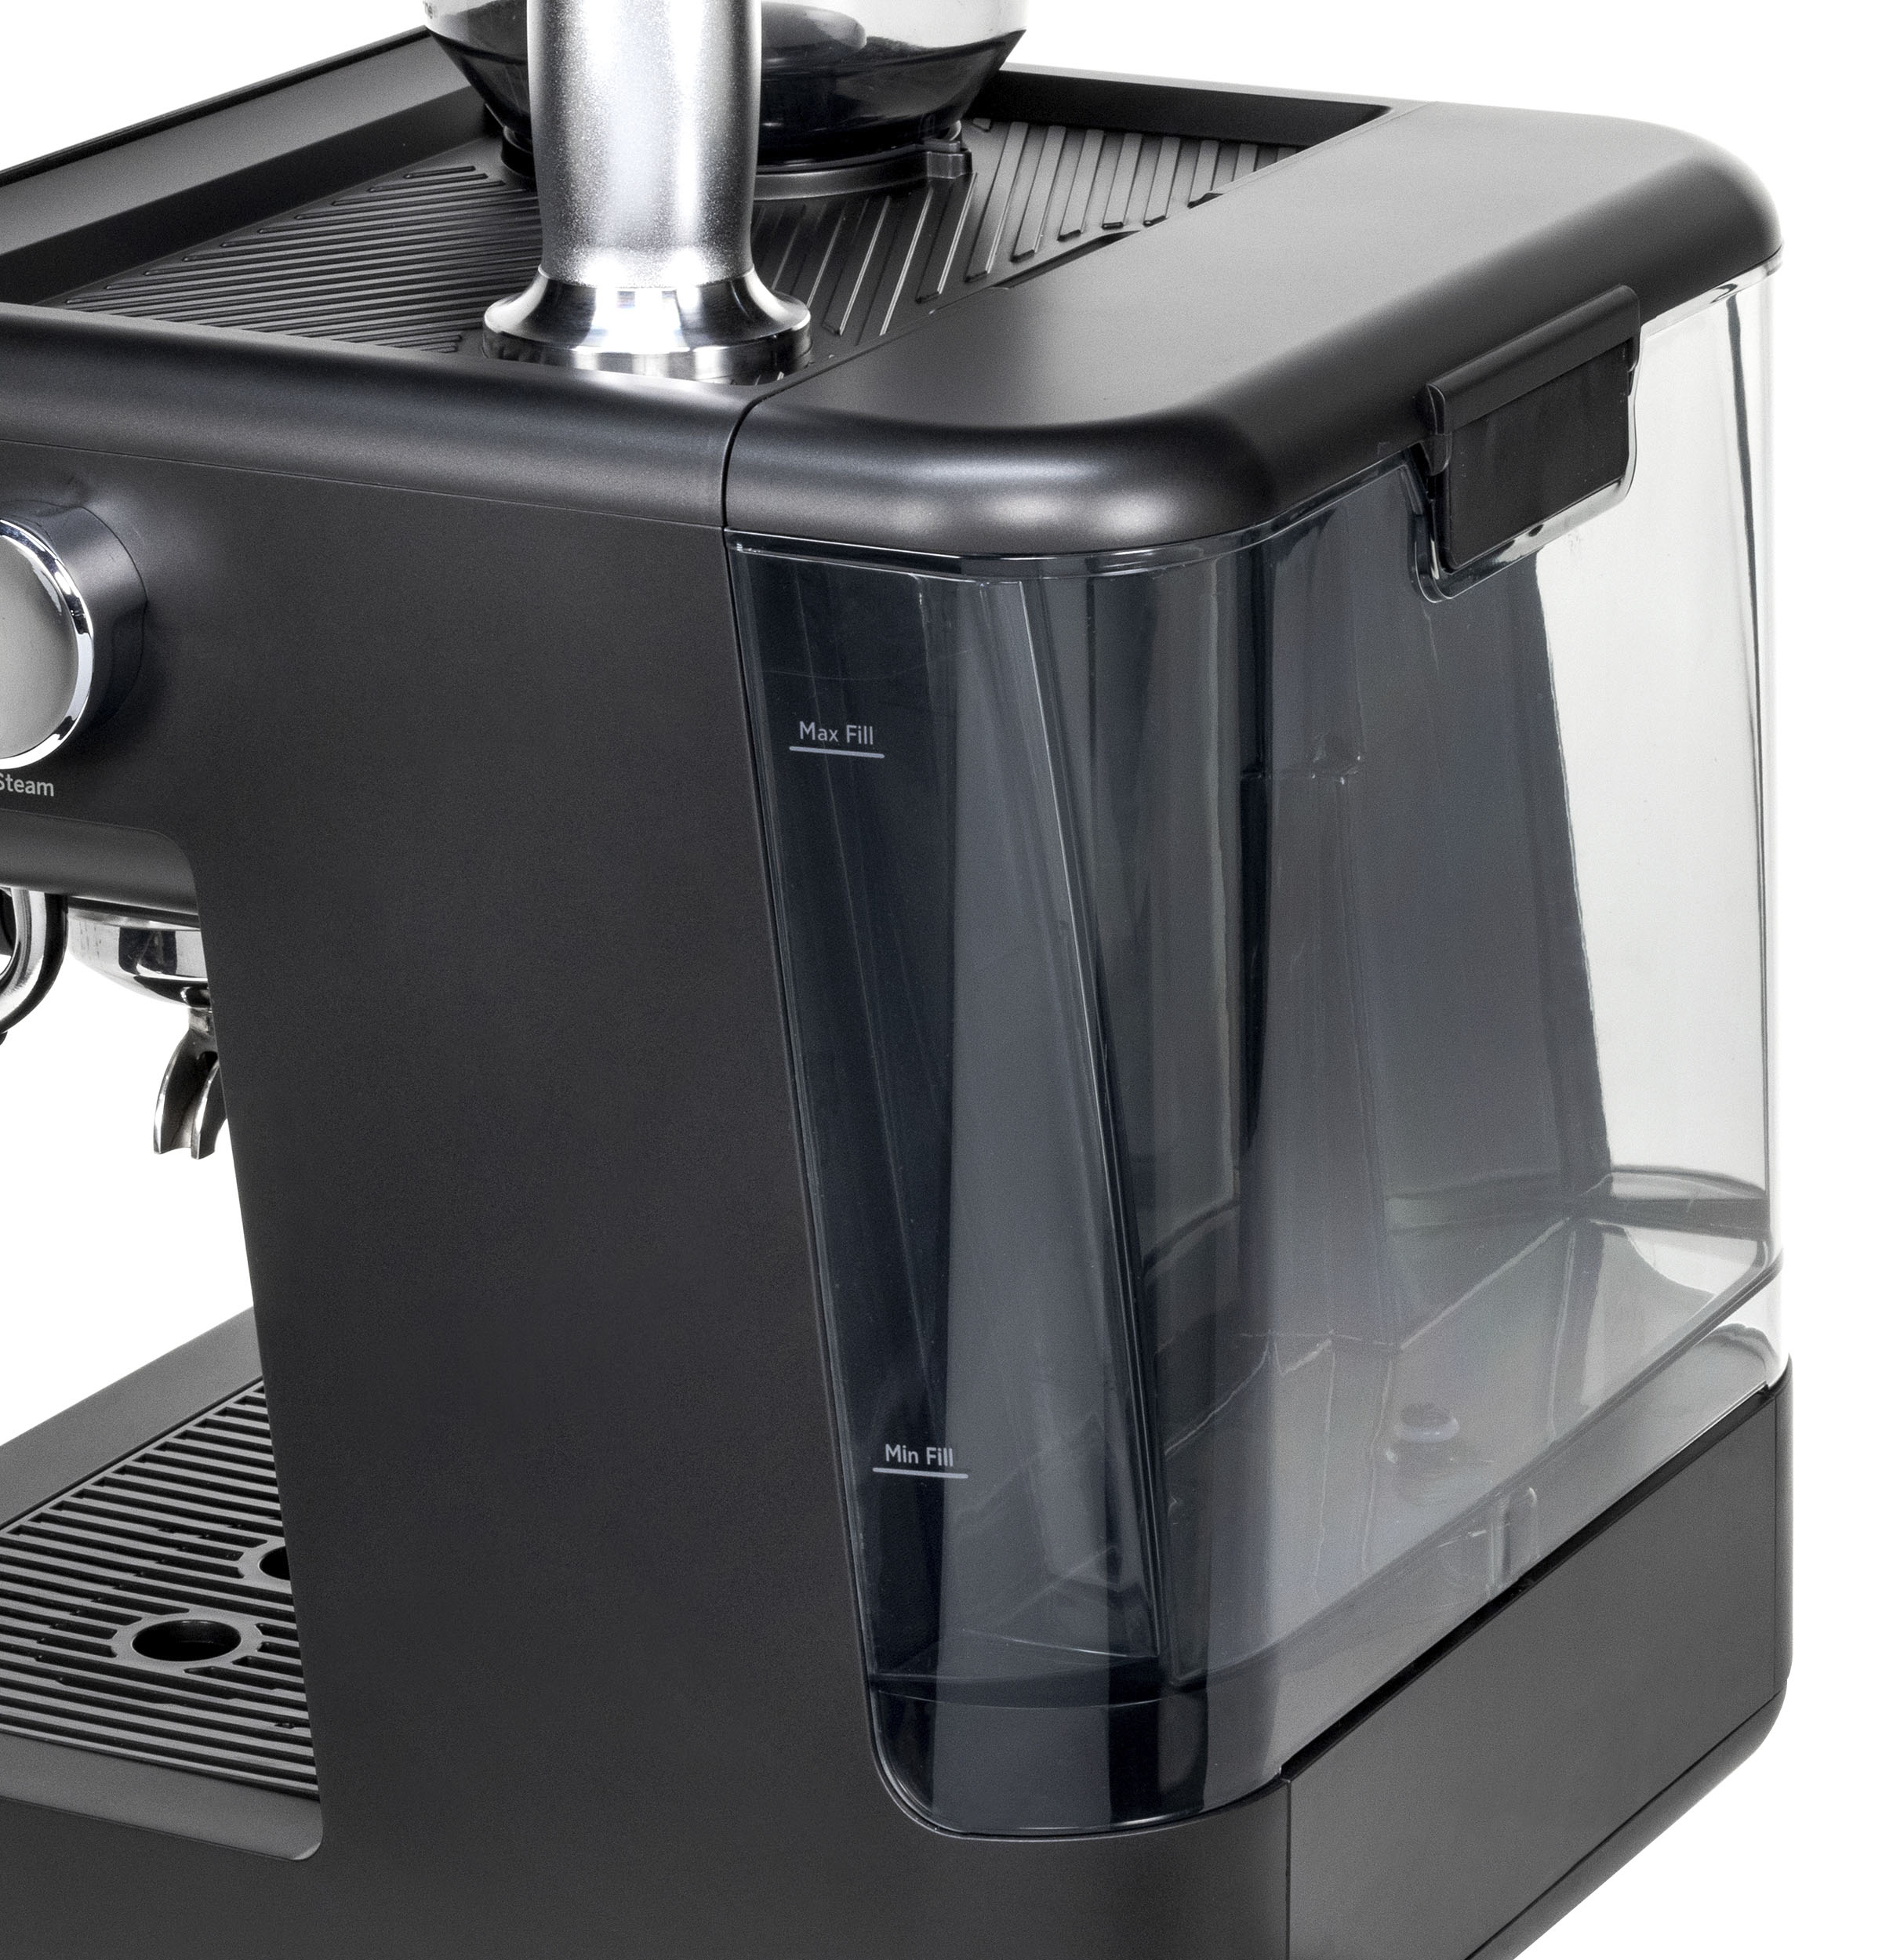 GE Profile™ Semi Automatic Espresso Machine + Frother - P7CESAS6RBB - GE  Appliances